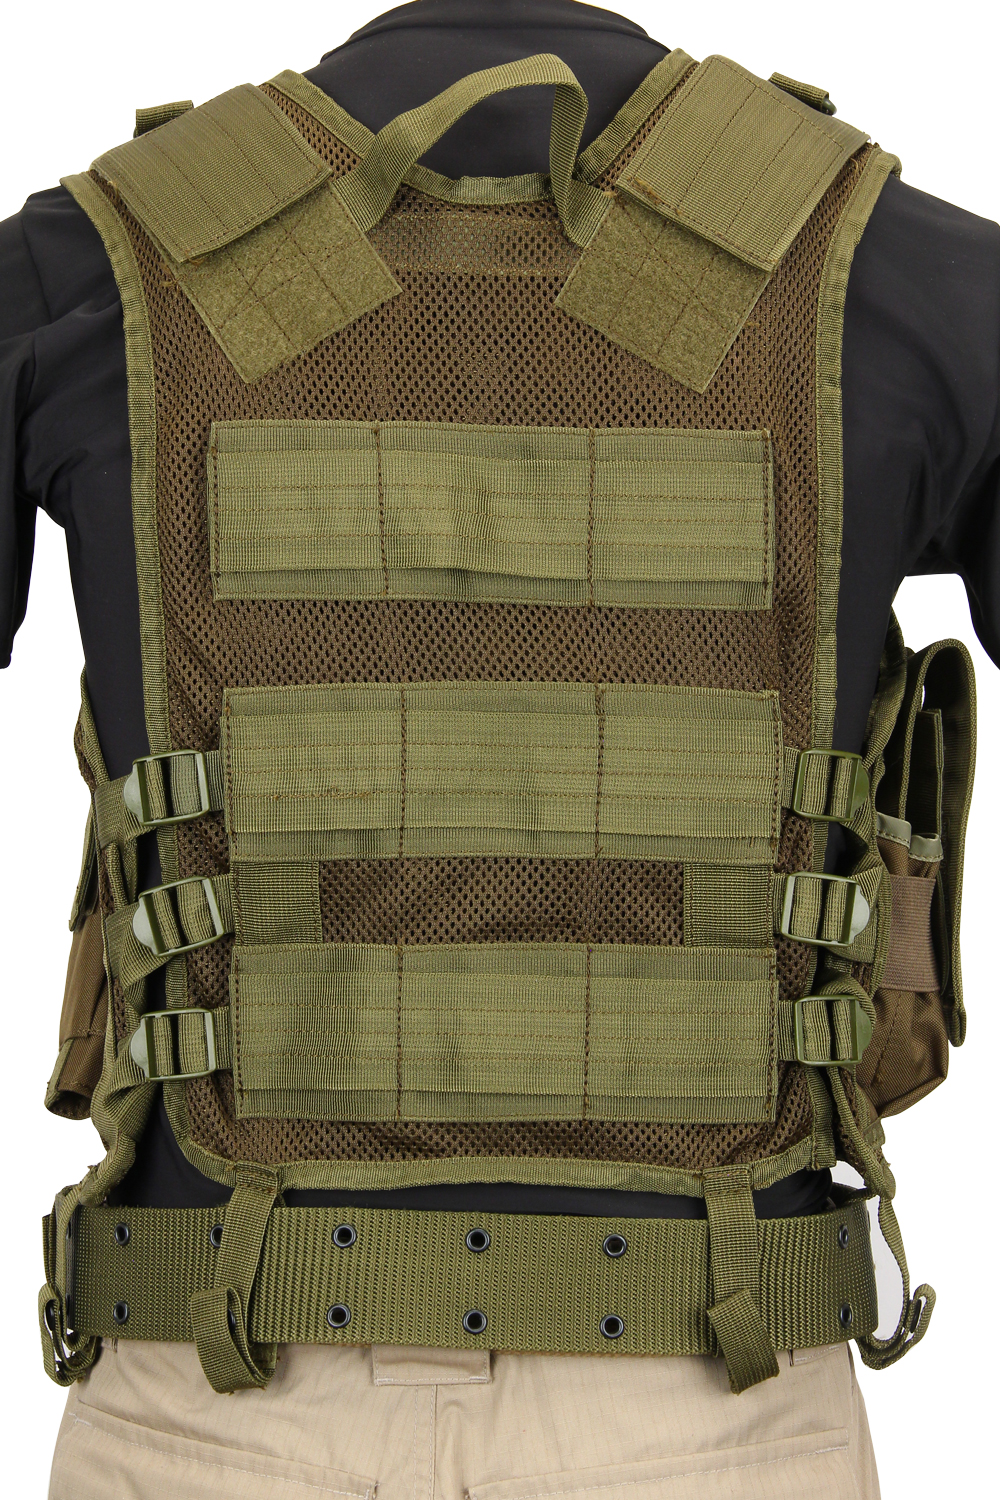 The Assault Vest | North Star Tactical